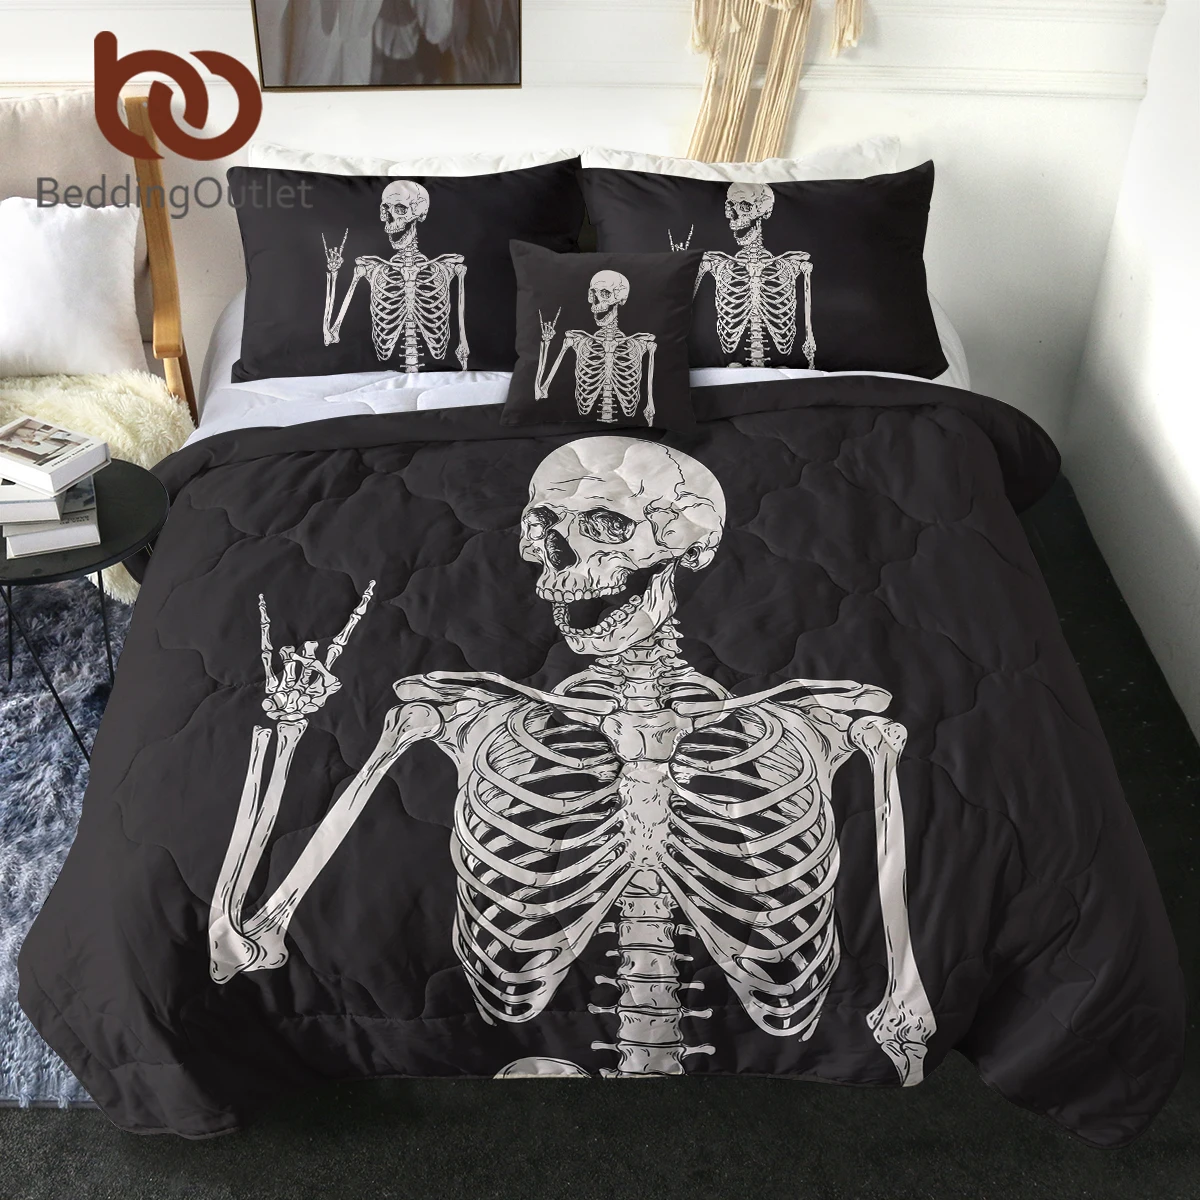 BeddingOutlet Colorful Skull Comforter Skeleton Pattern Bedding Set Quilt With Cushion Cover Bedroom Home Living Room Sofa Decor